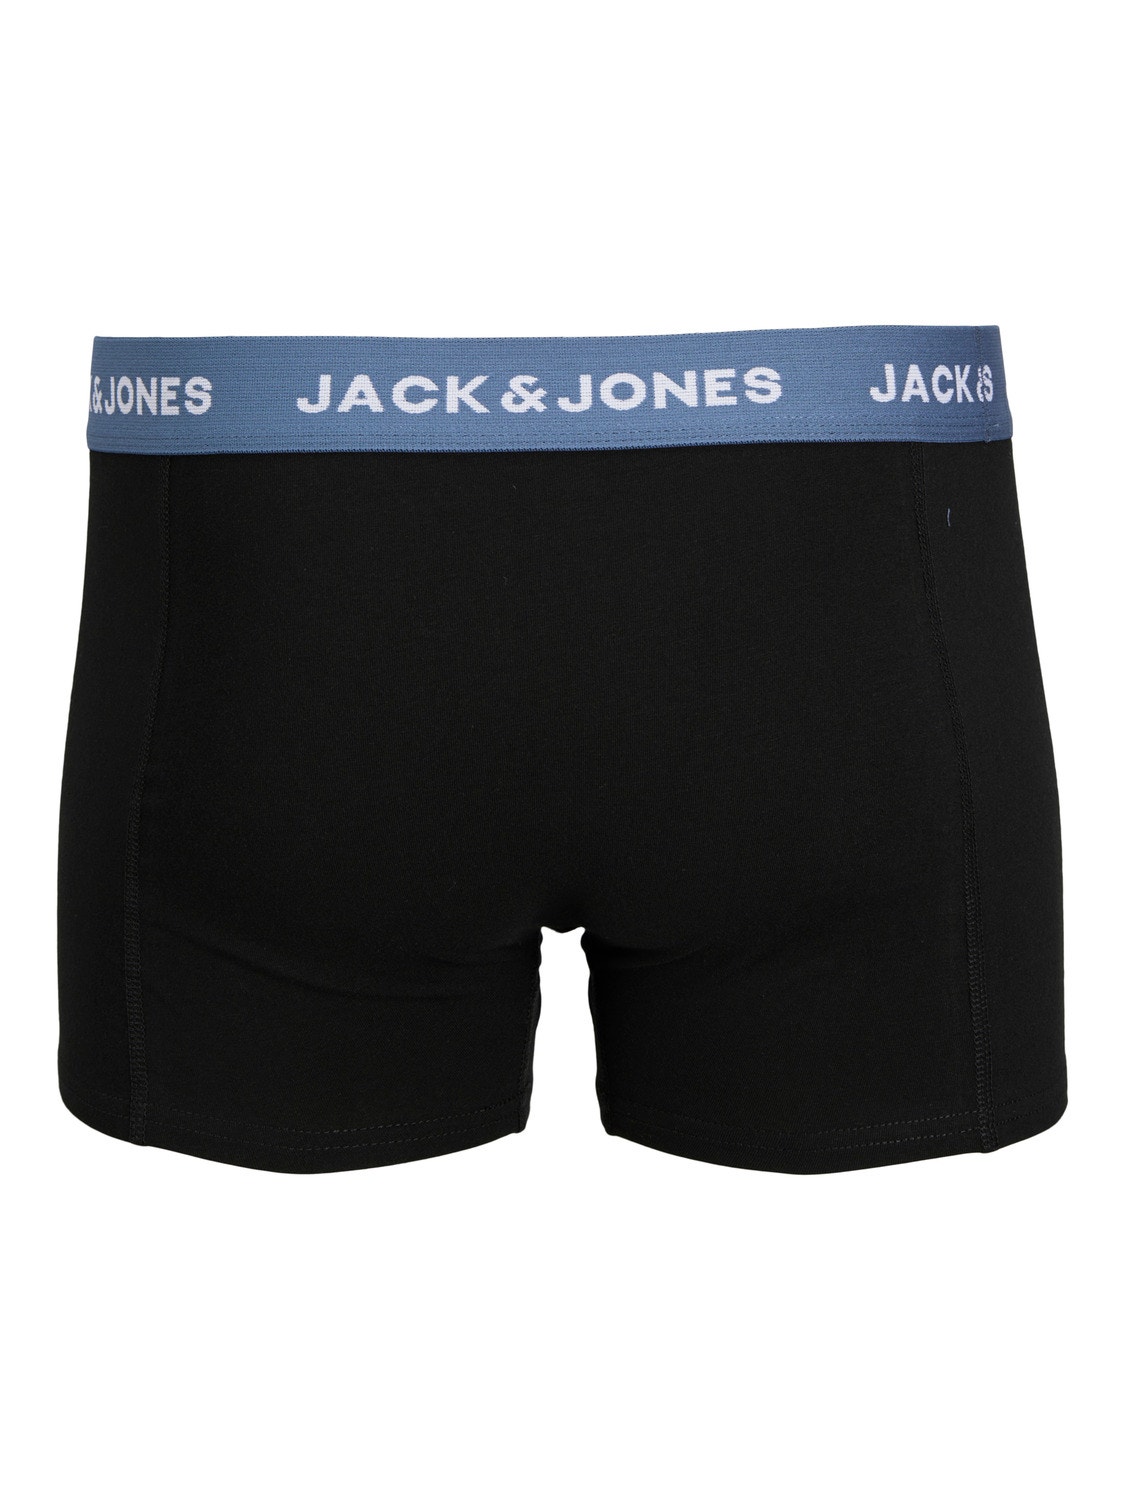 Jack & Jones 5-pak Trunks -Black - 12254366